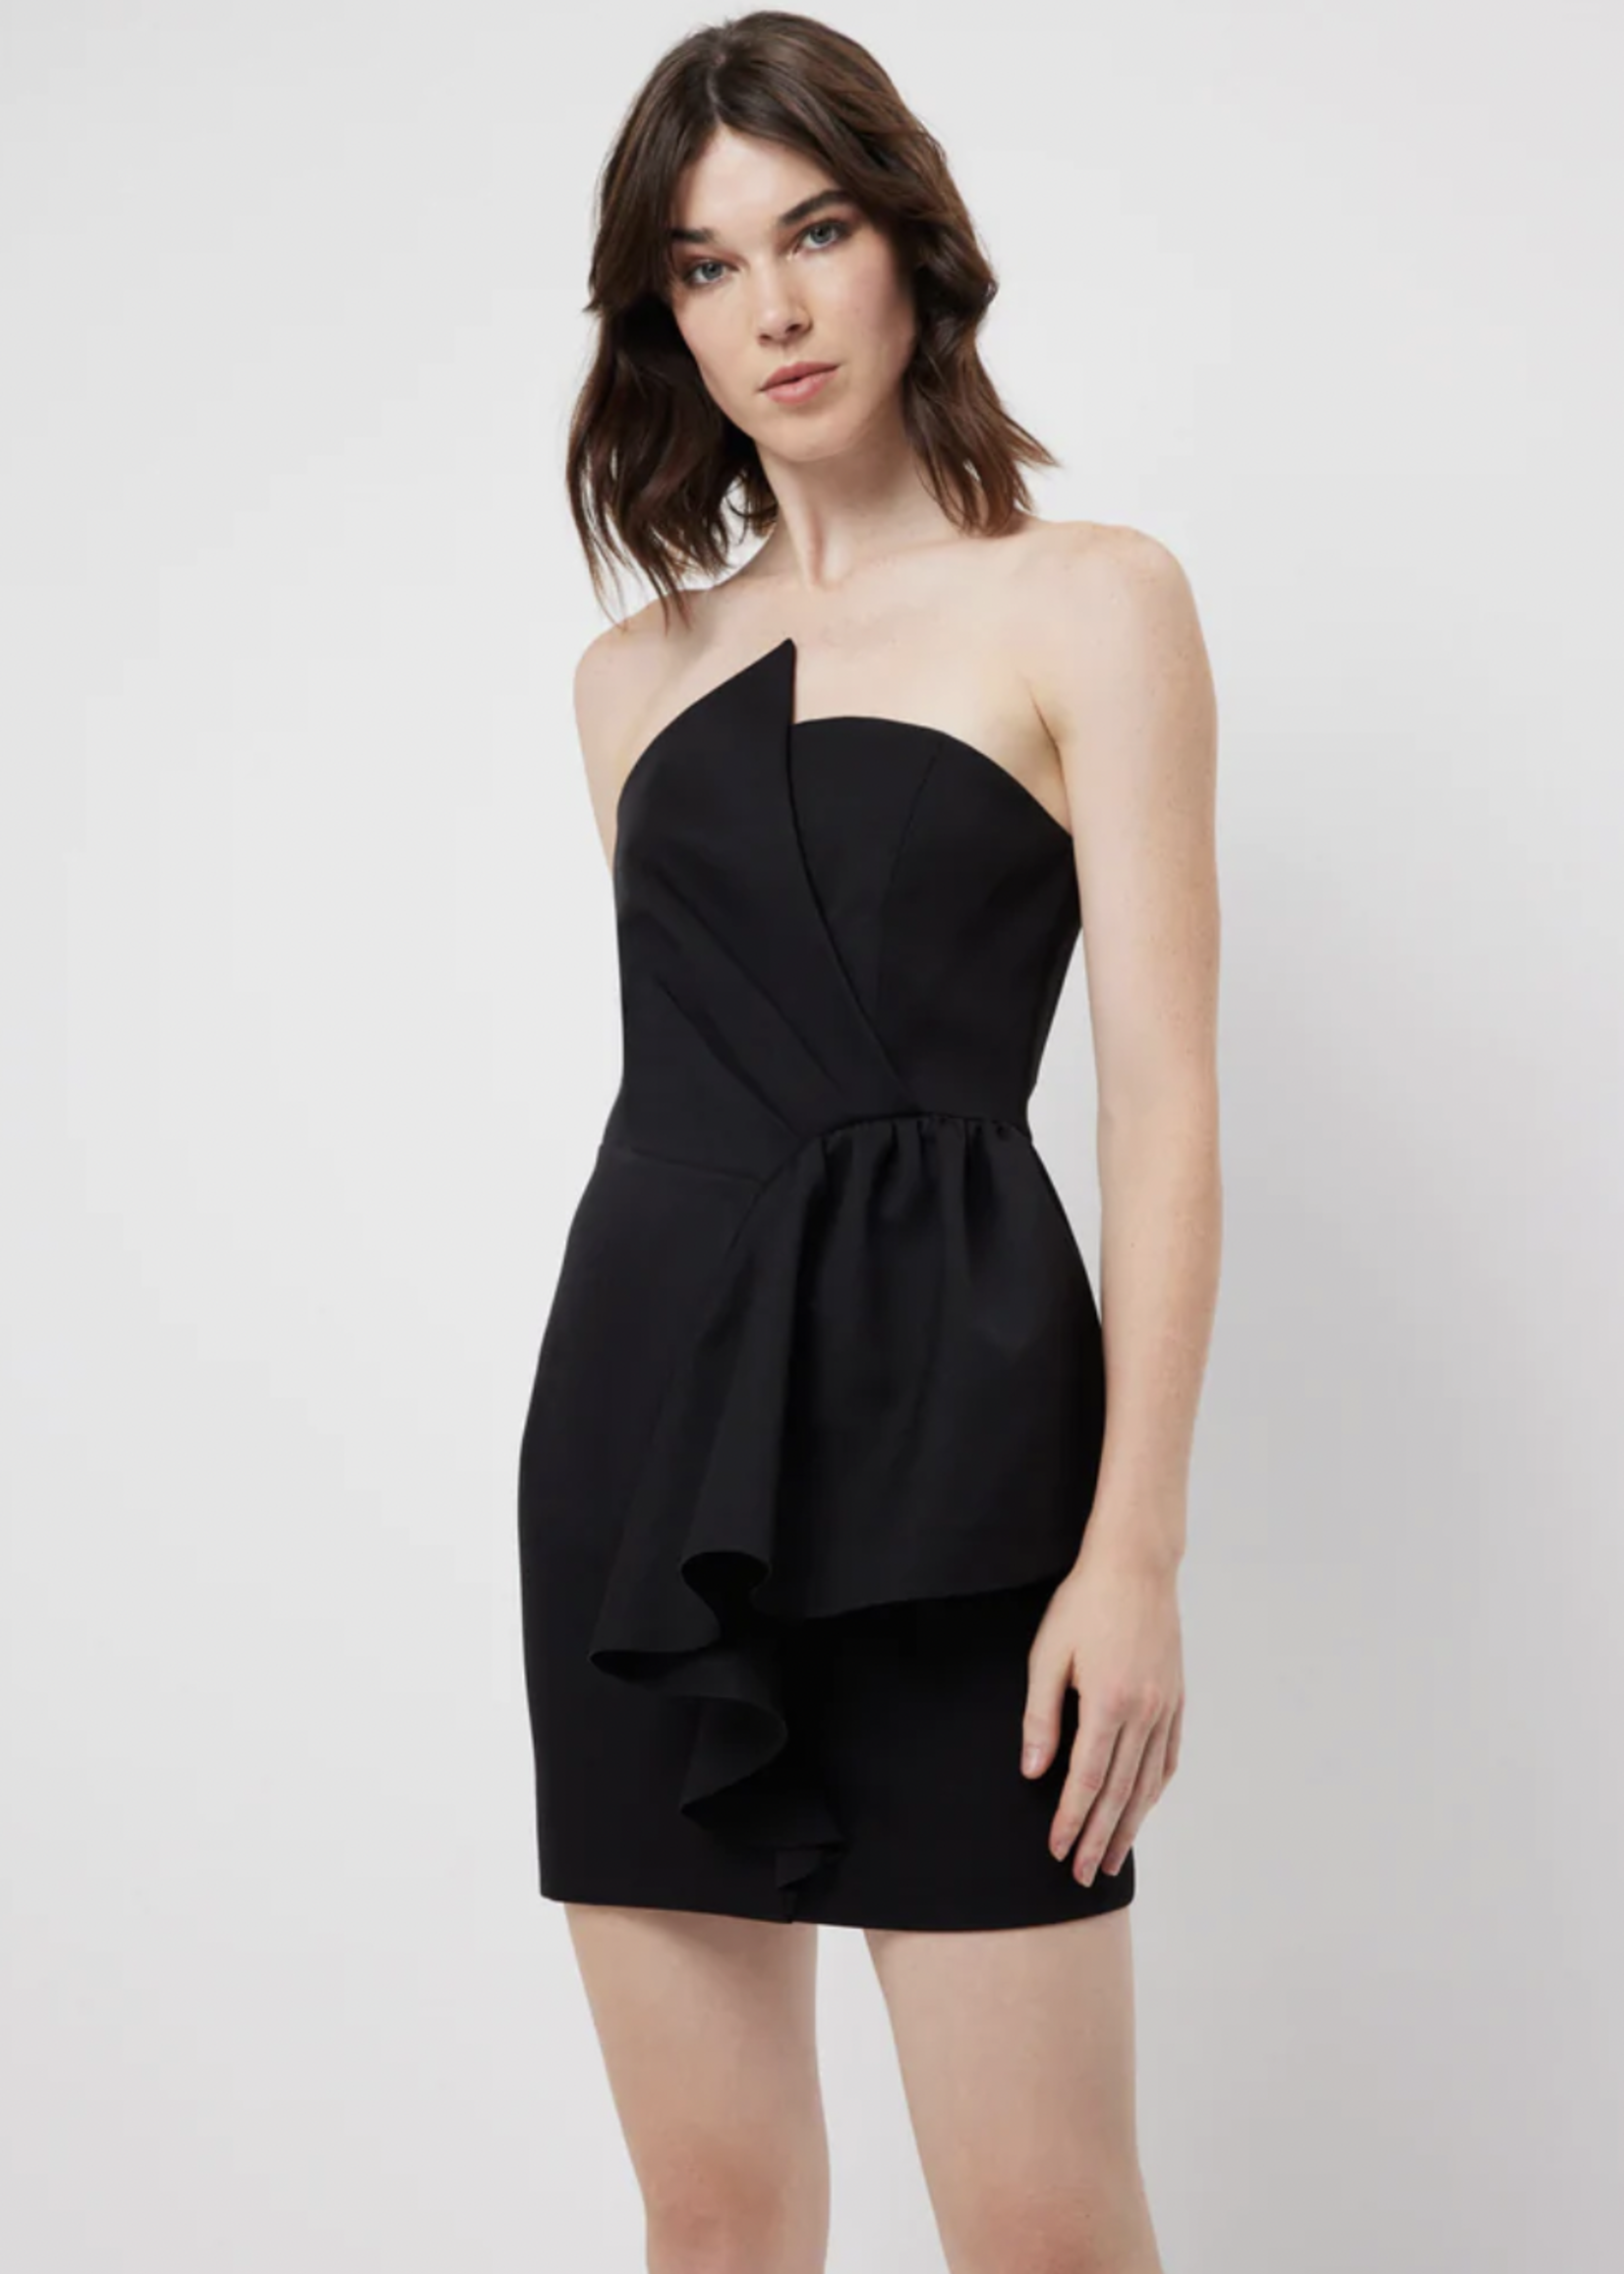 Elitaire Boutique Zuri Dress in Black